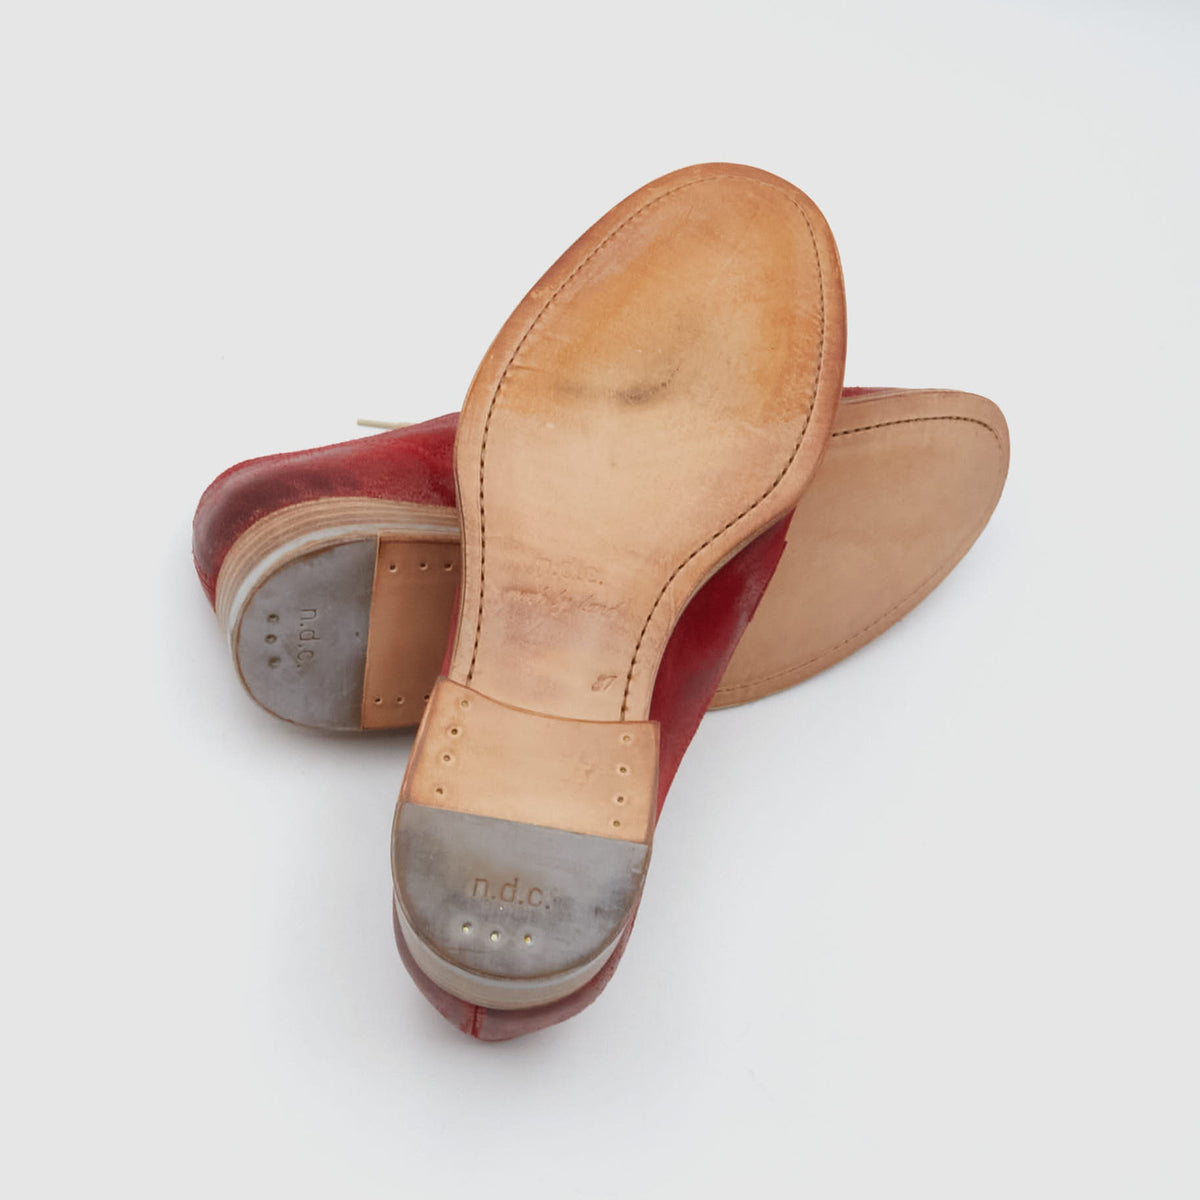 n.d.c. made by hand Ladies Round Toe BlucherShoes